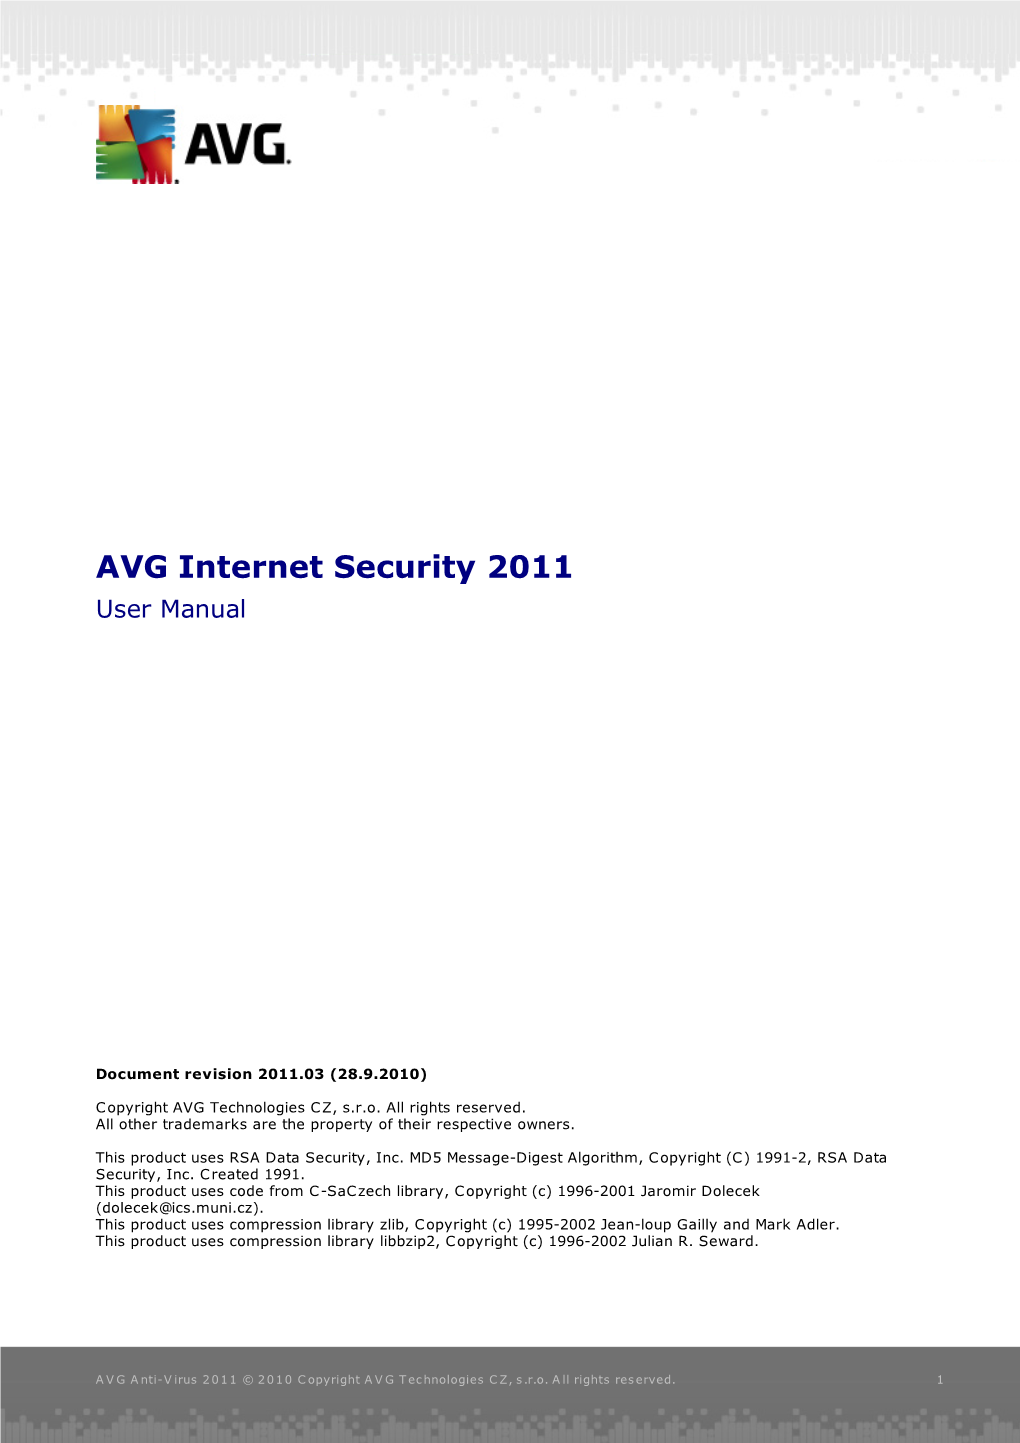 AVG Internet Security 2011 User Manual